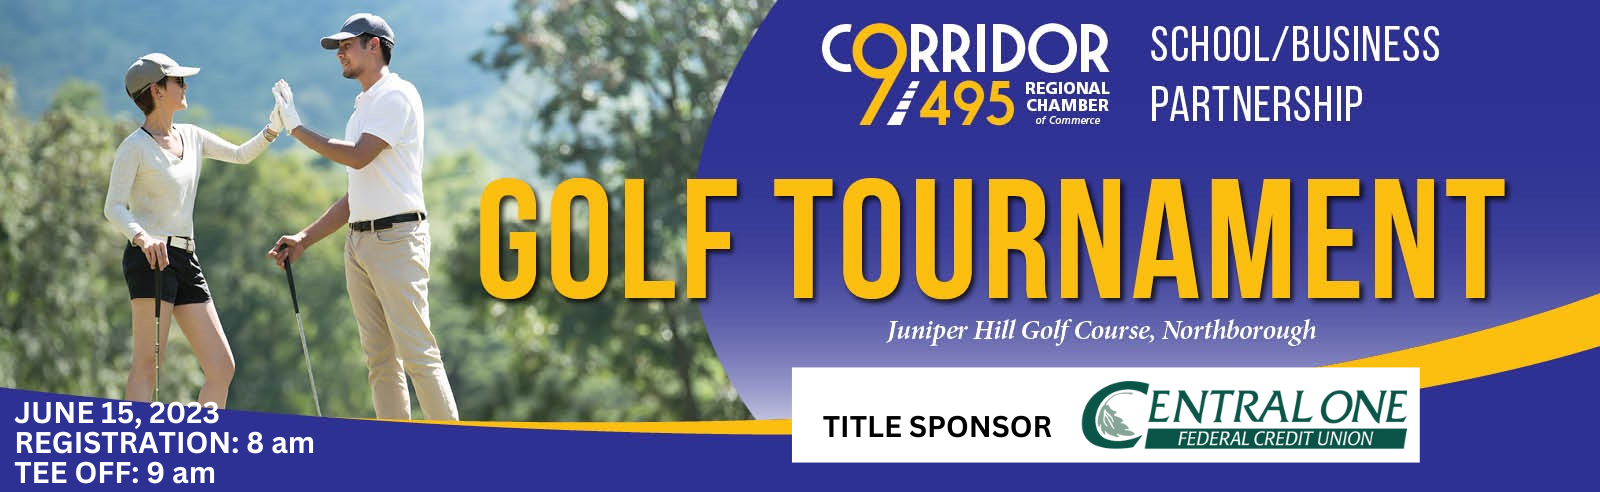 Final Golf Logo for Website